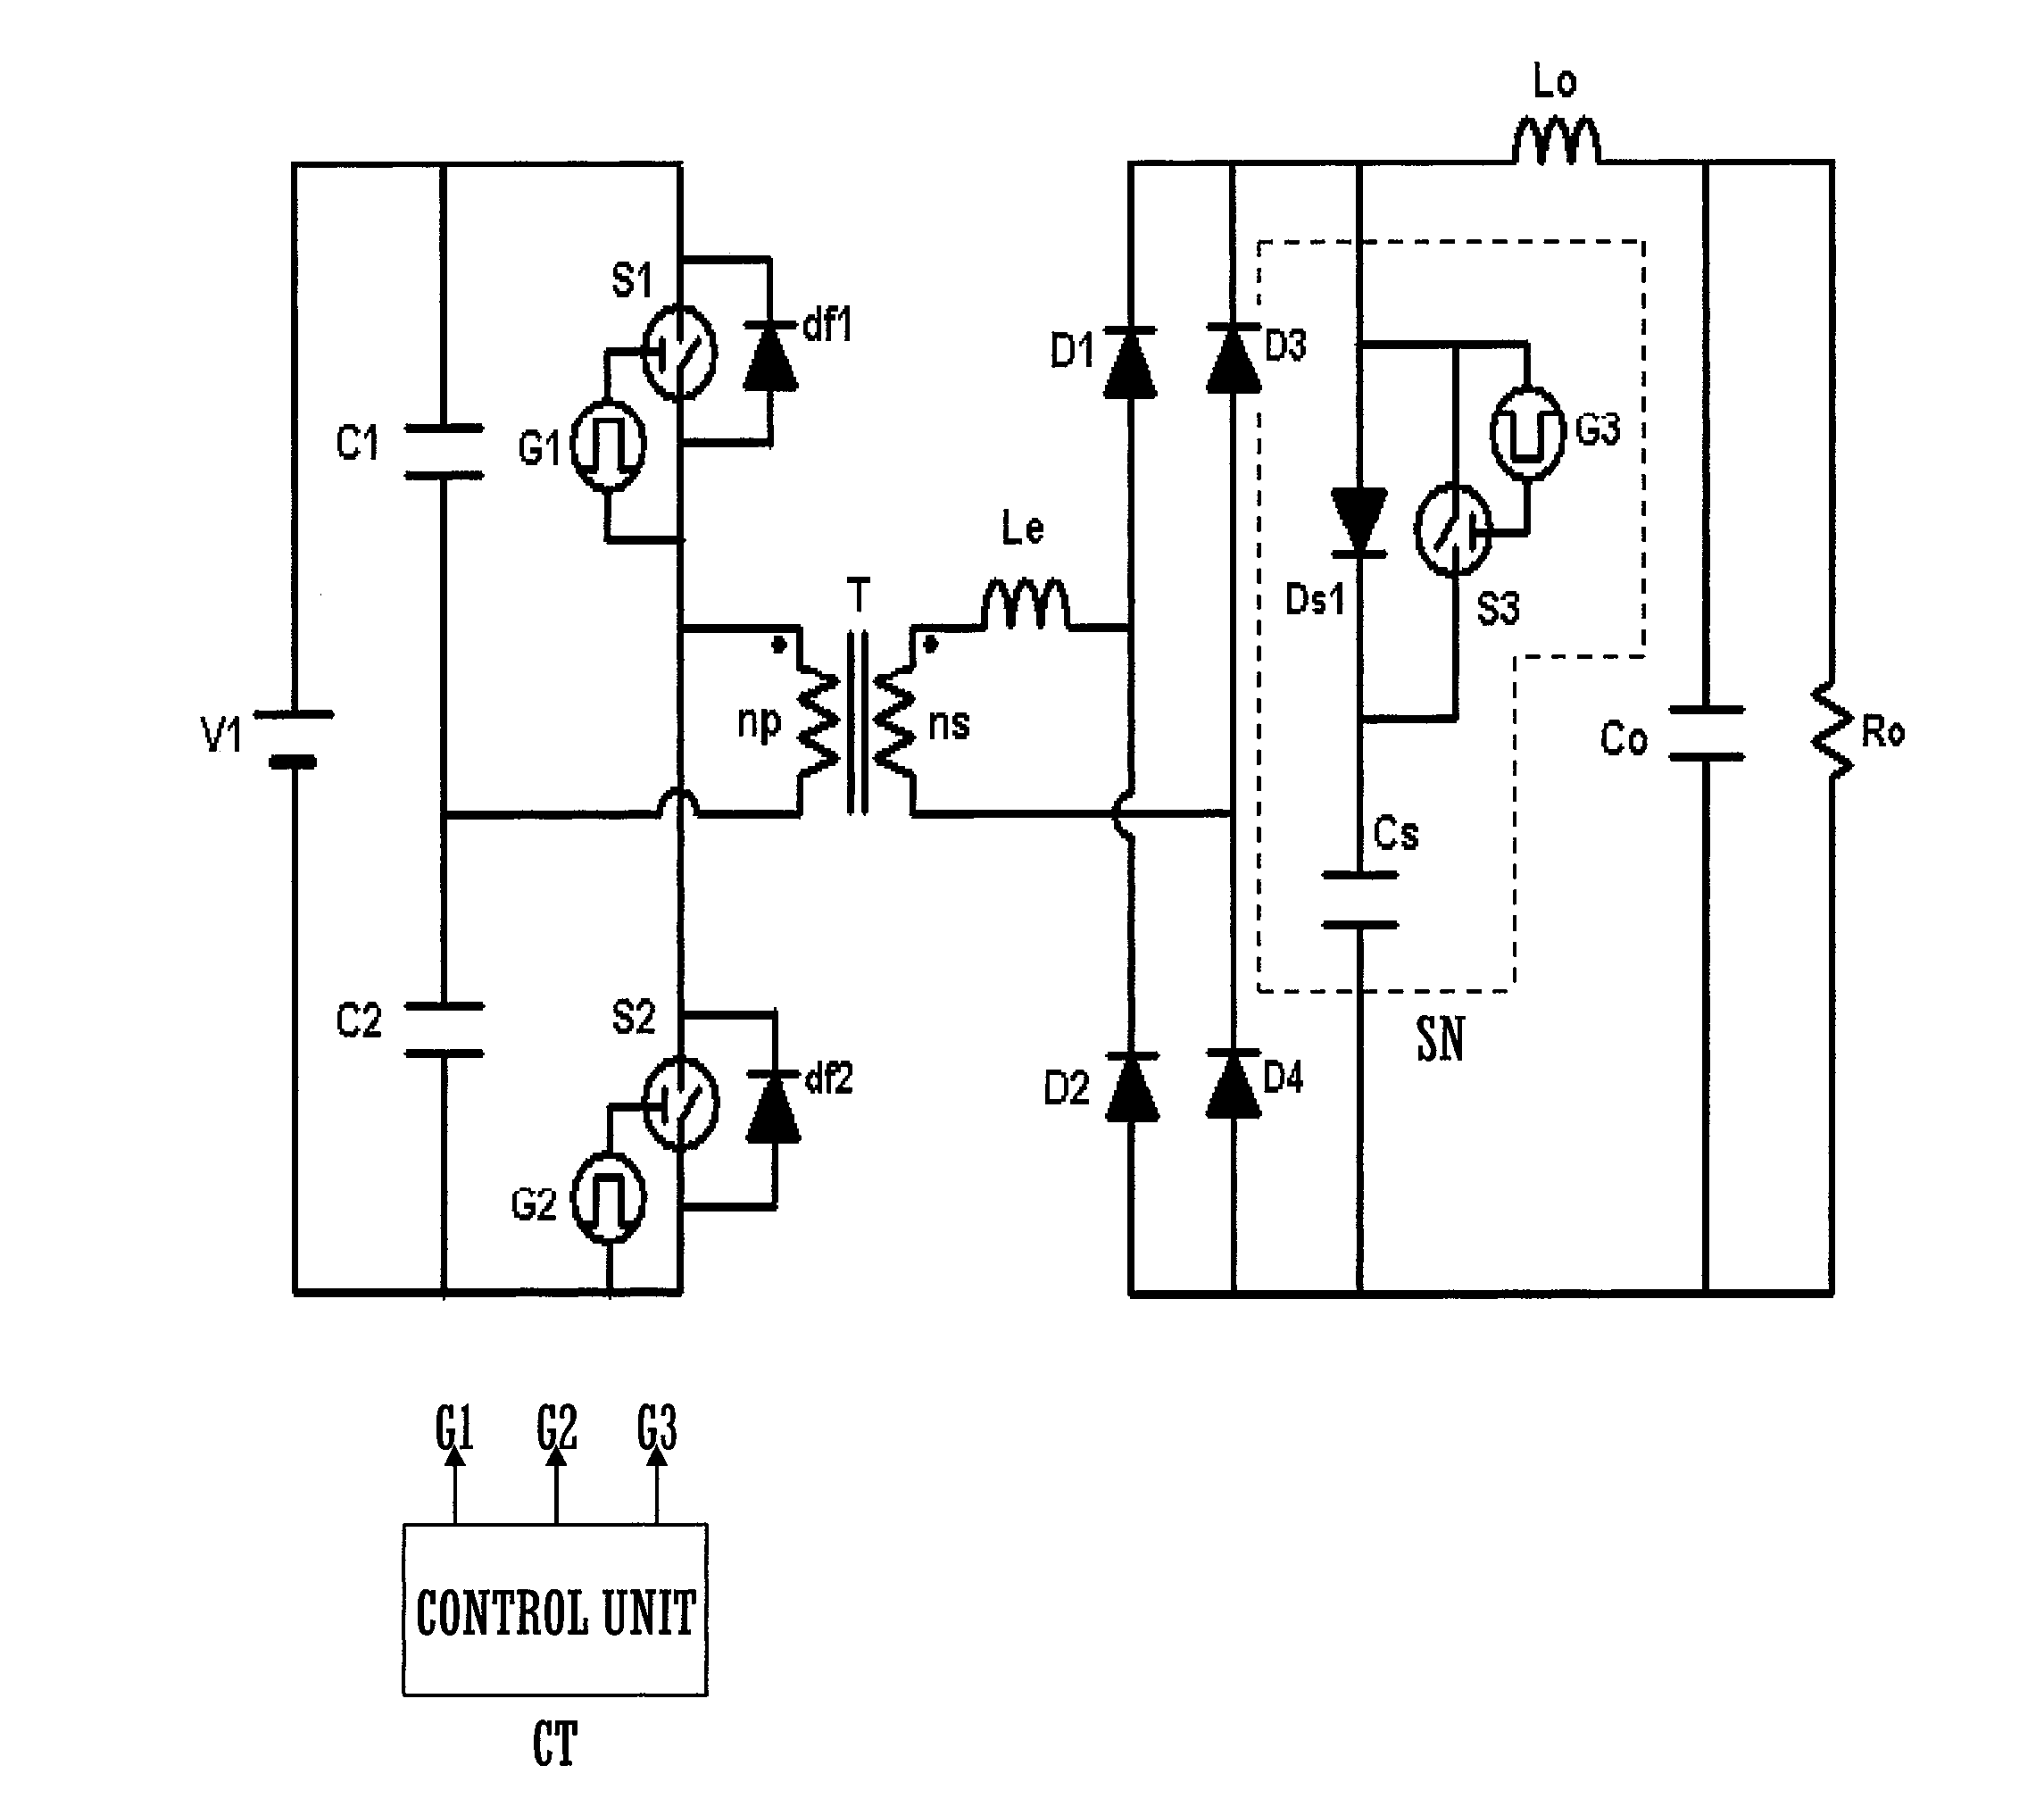 Dc-dc converter circuit